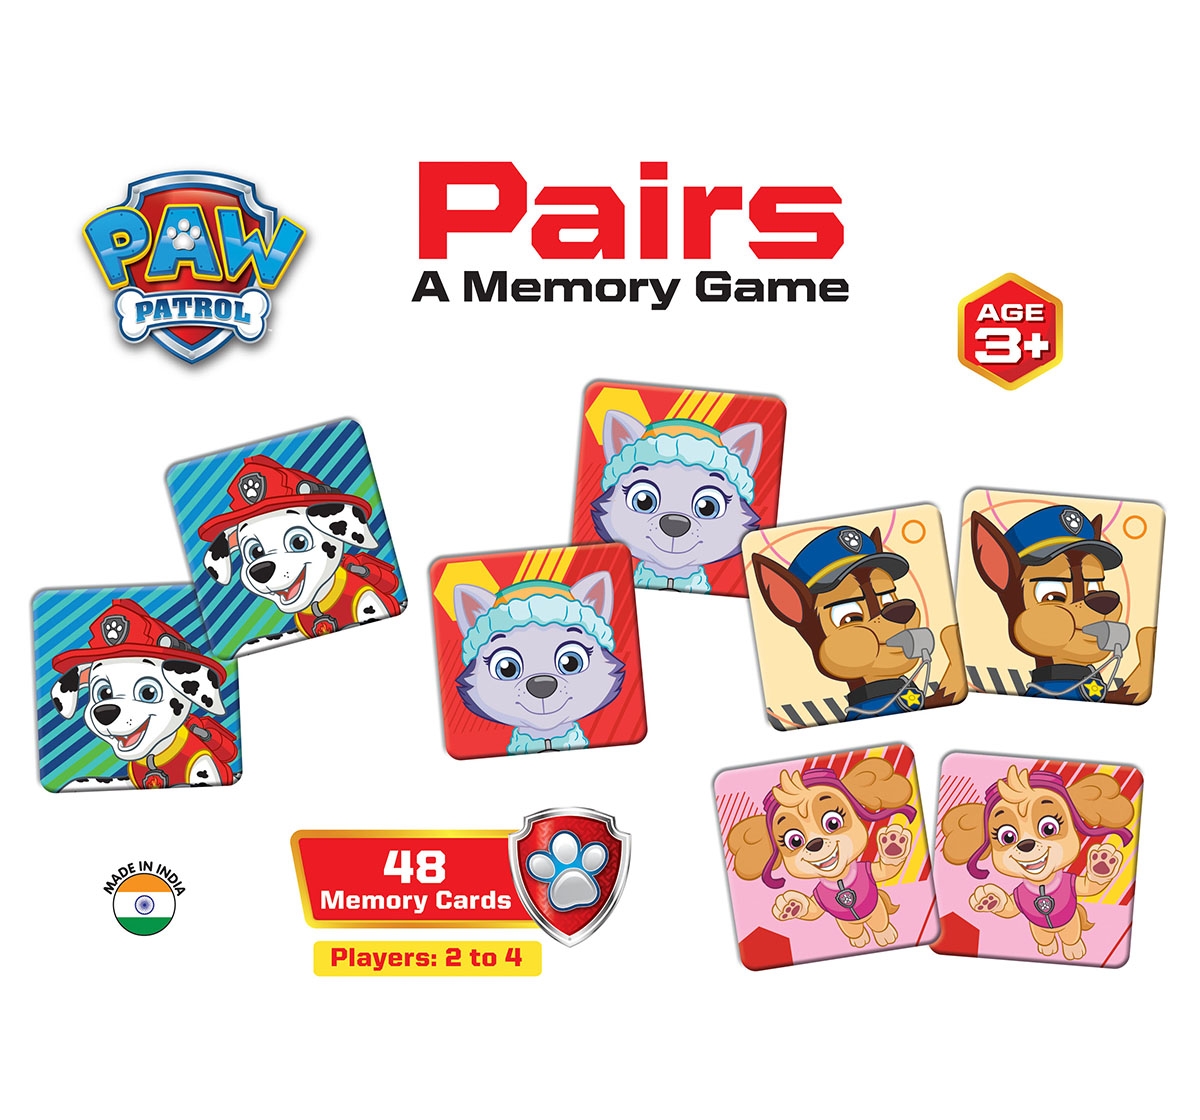 Paw Patrol | Paw Patrol Pairs - A Memory Game, 3Y+ 2